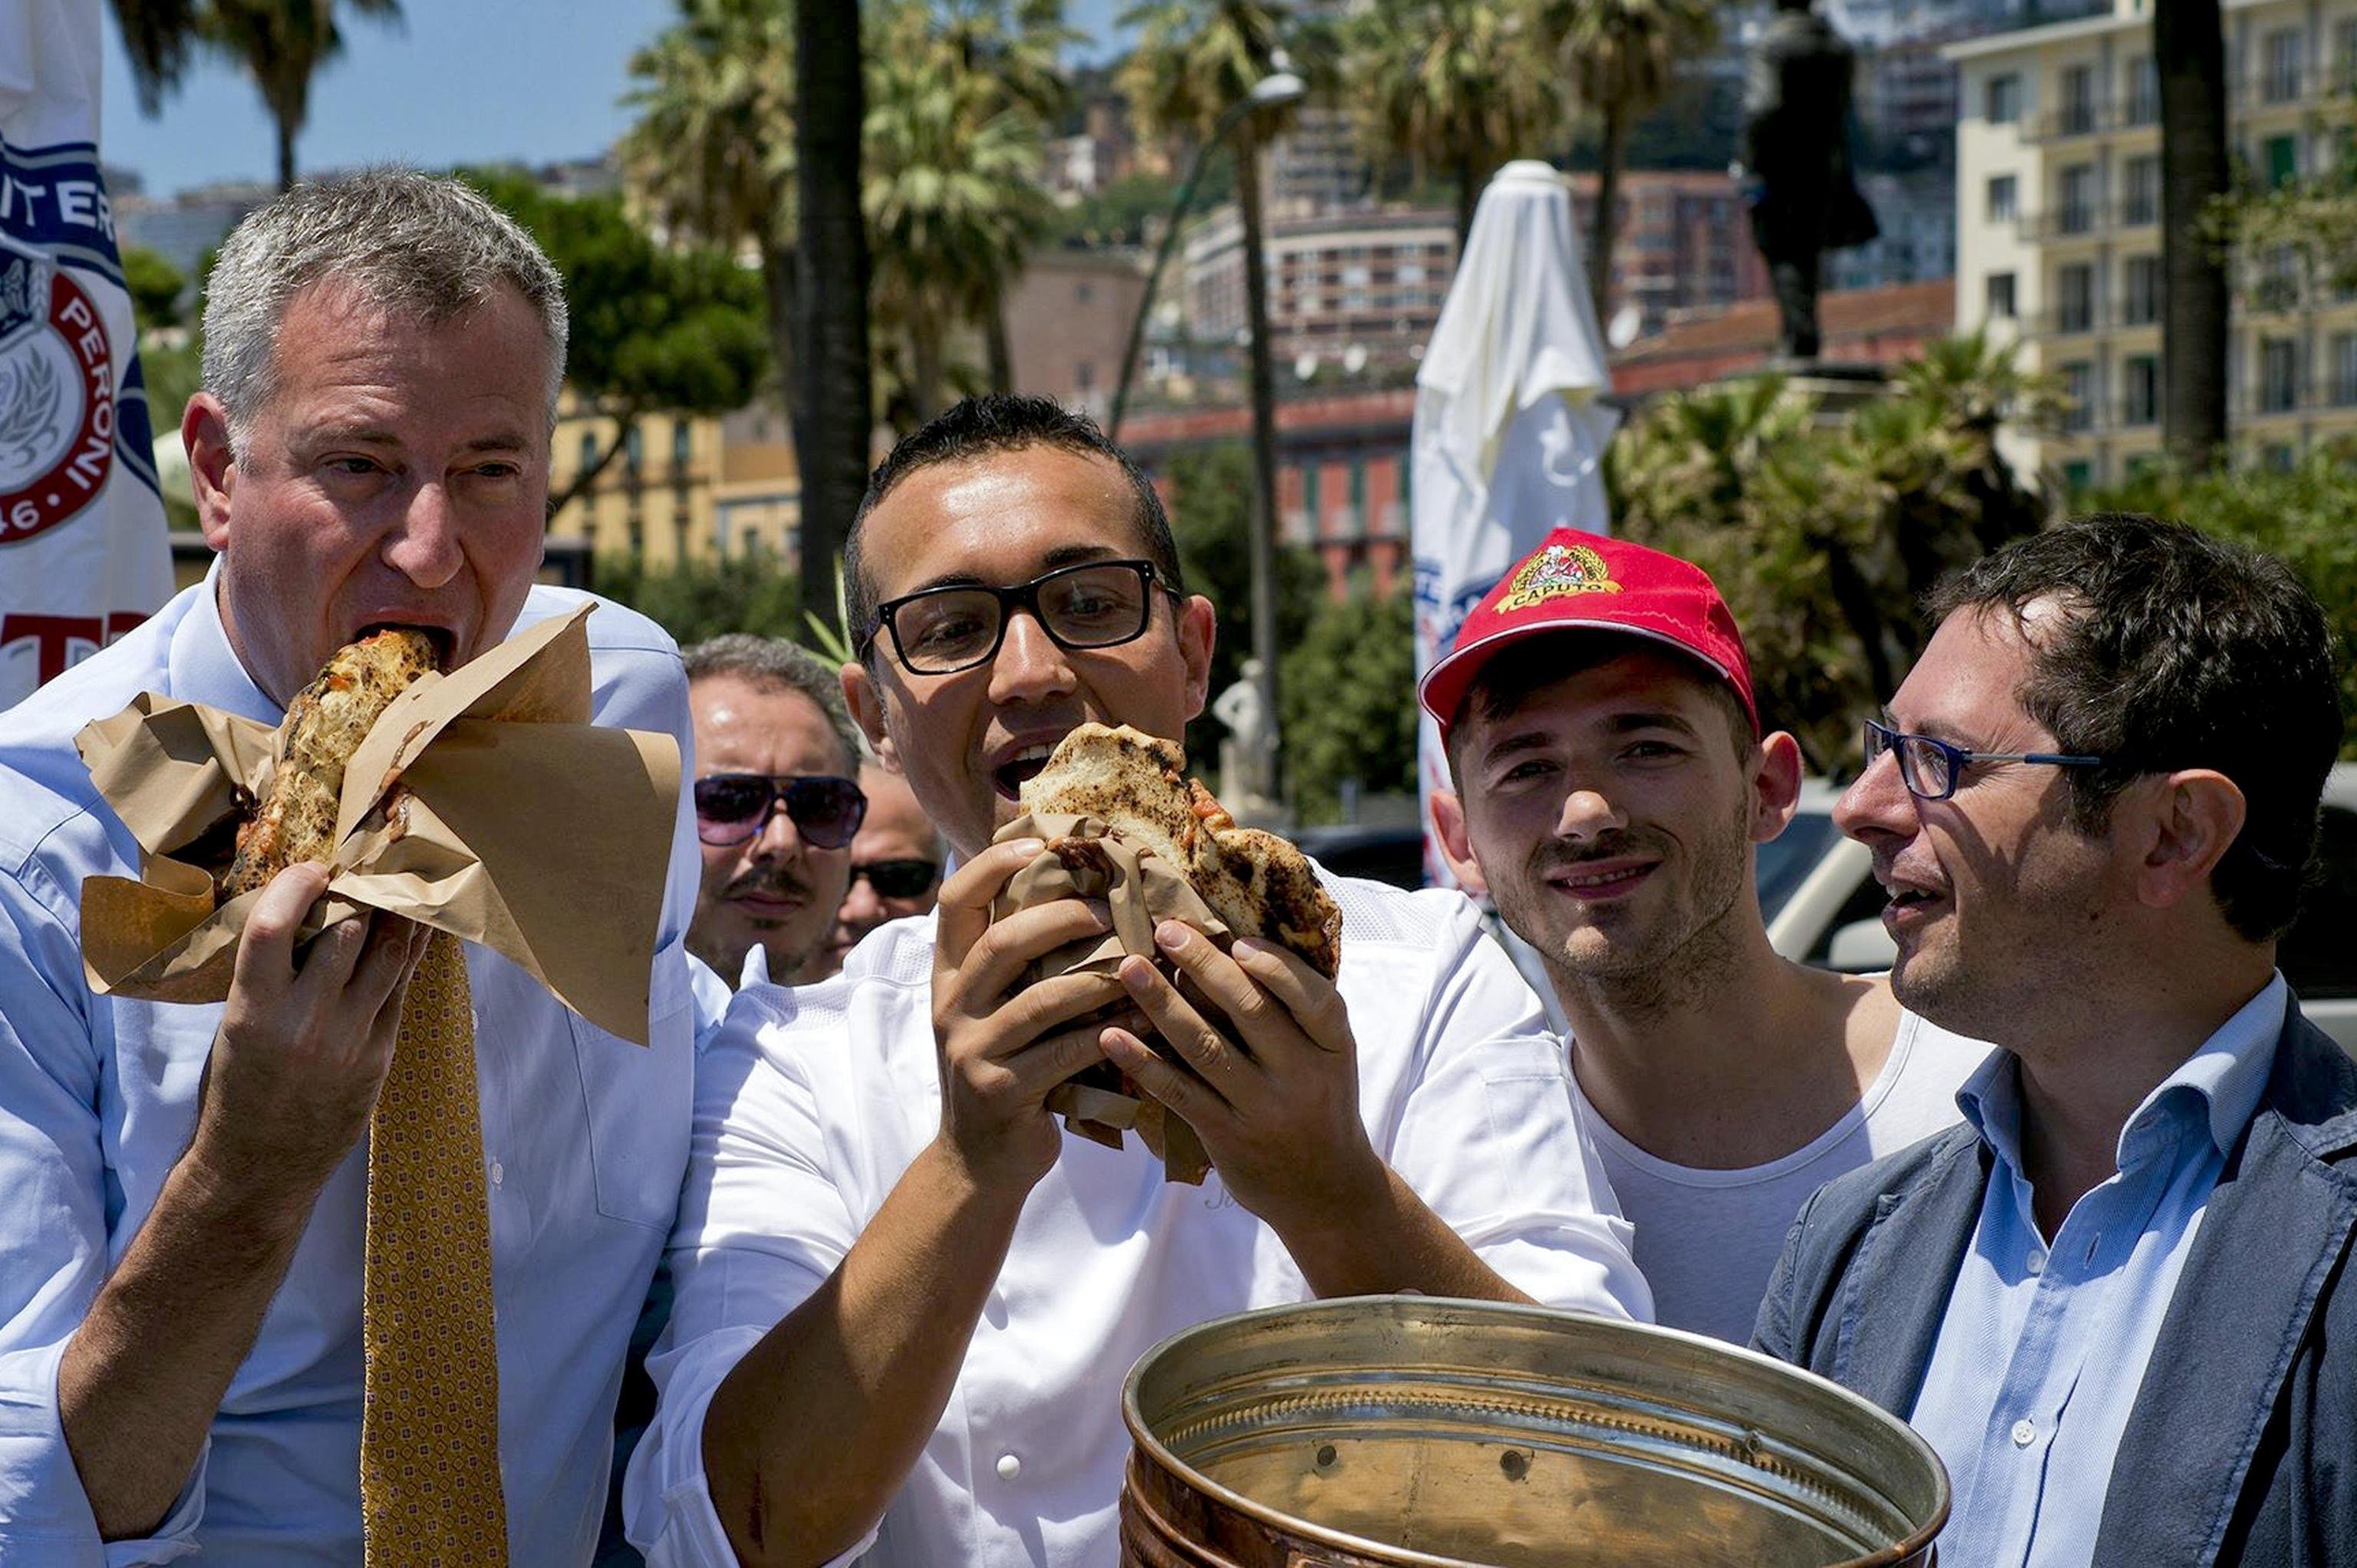 New York mayor Bill de Blasio (L) eats a pizza made by Napoli's pizza chef Gino Sorbillo (2nd from L) in Naples, Italy on July 23, 2014. (Pietro Avallone—Zuma Press)